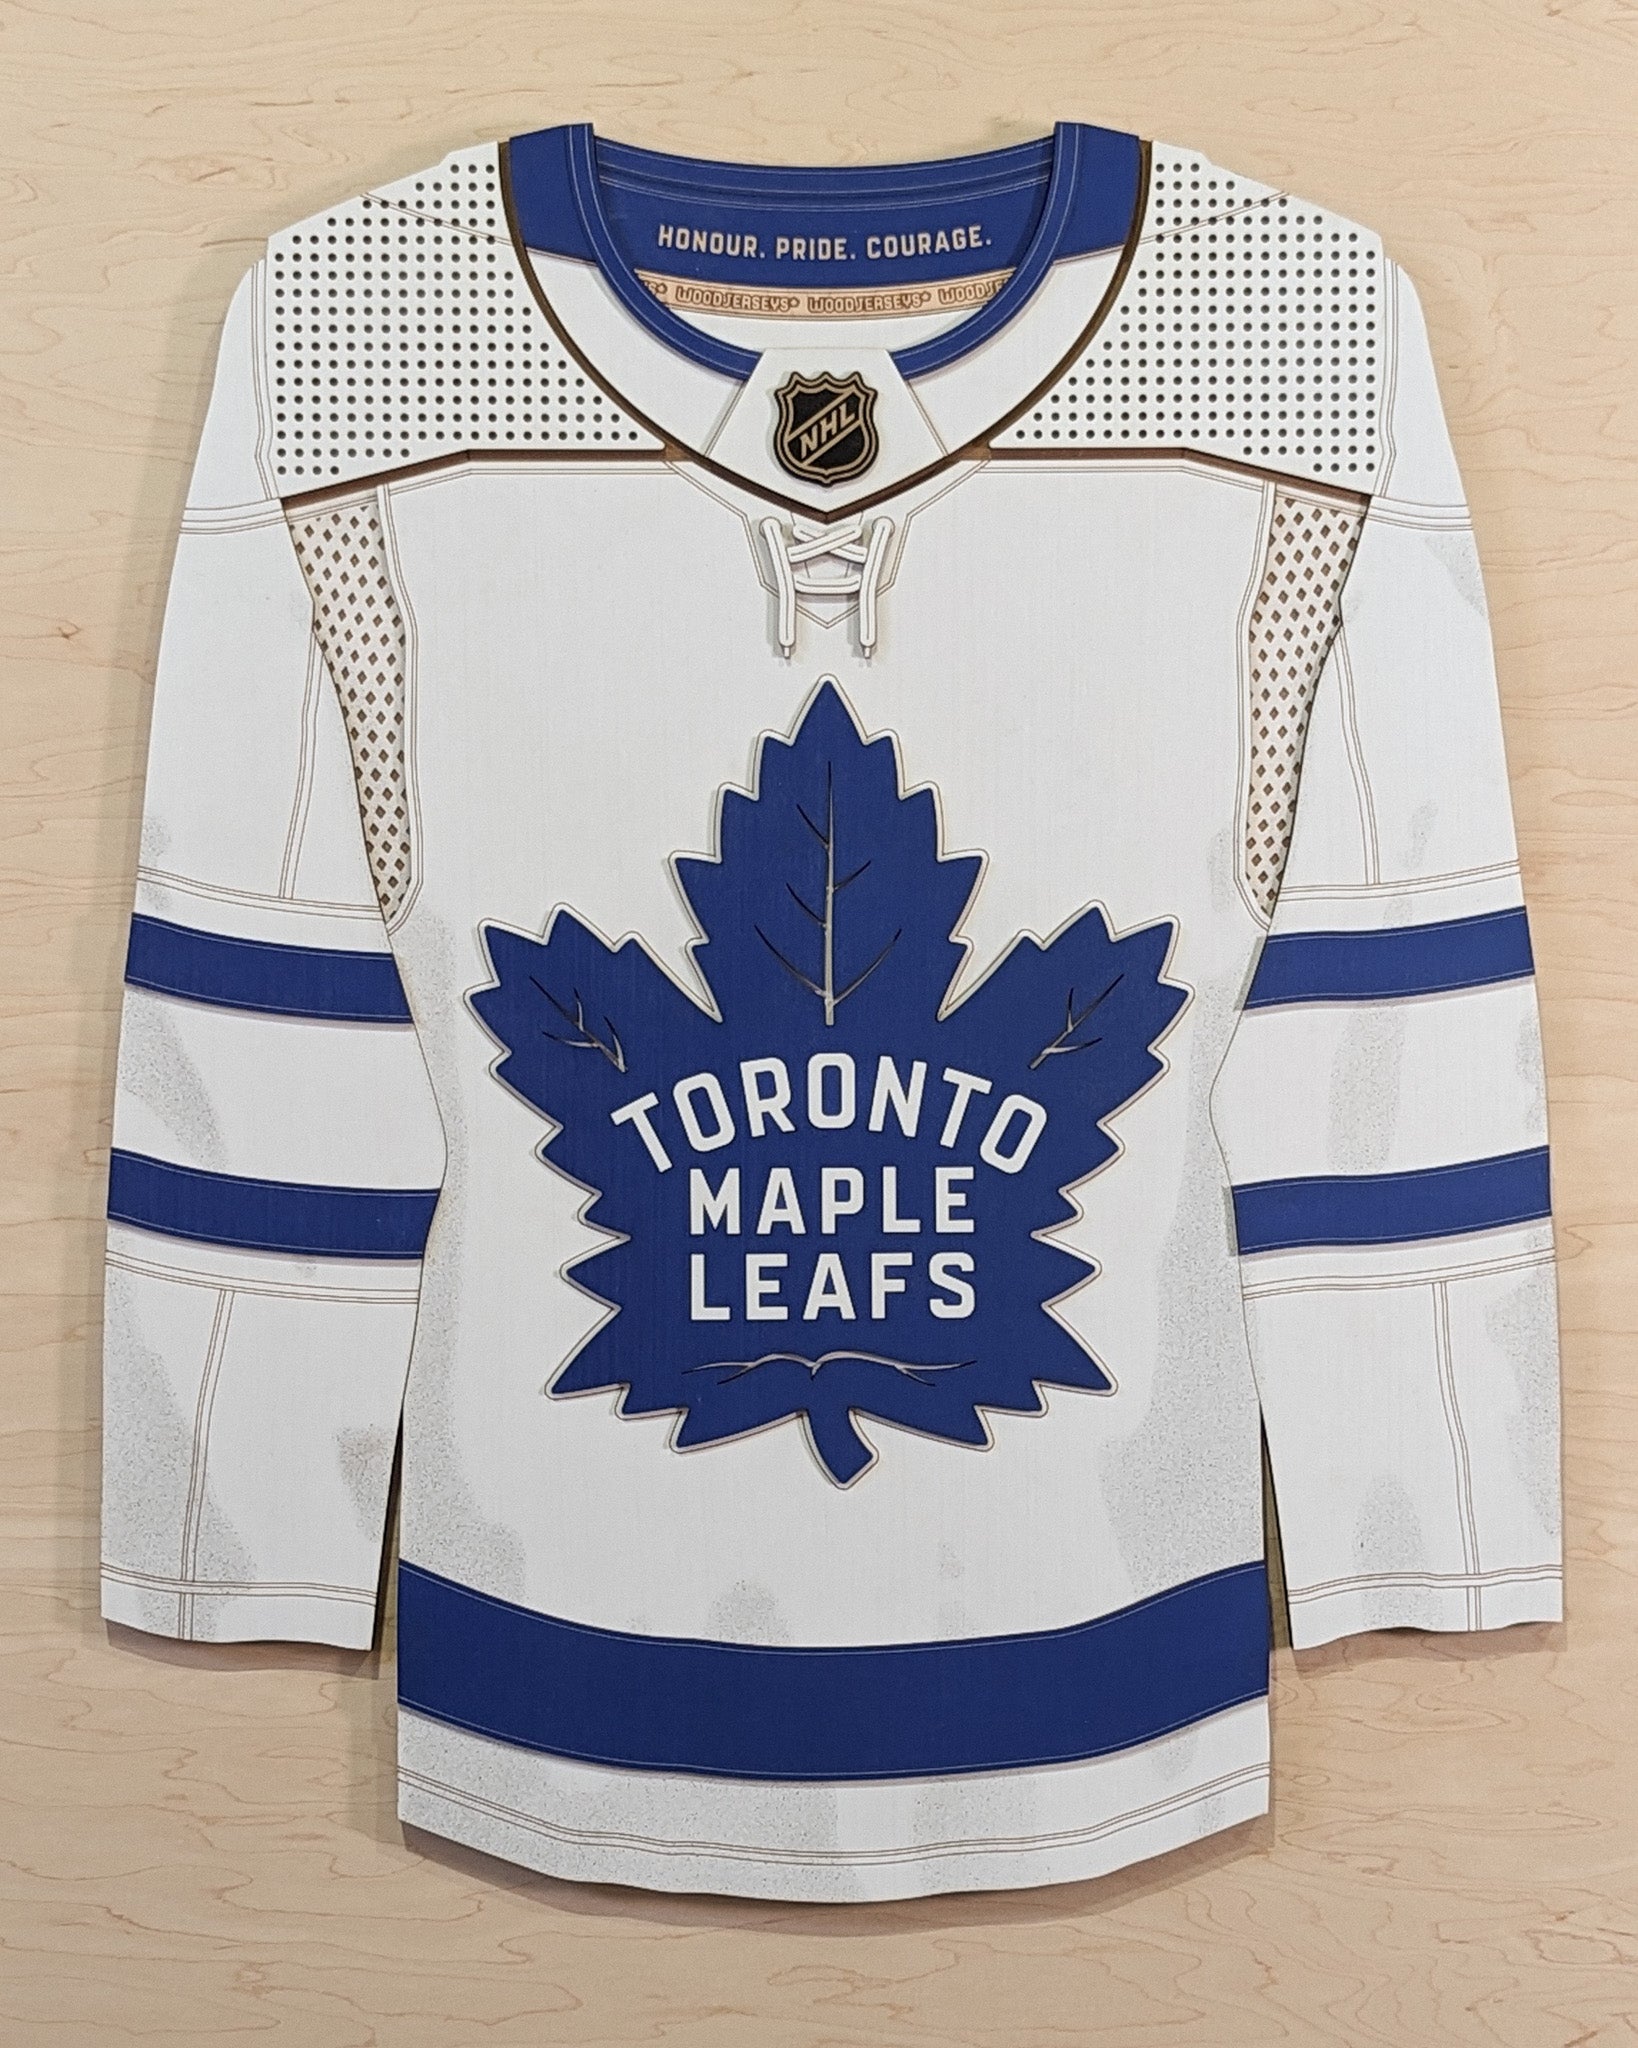 NHL Toronto Maple Leaf's hockey jersey